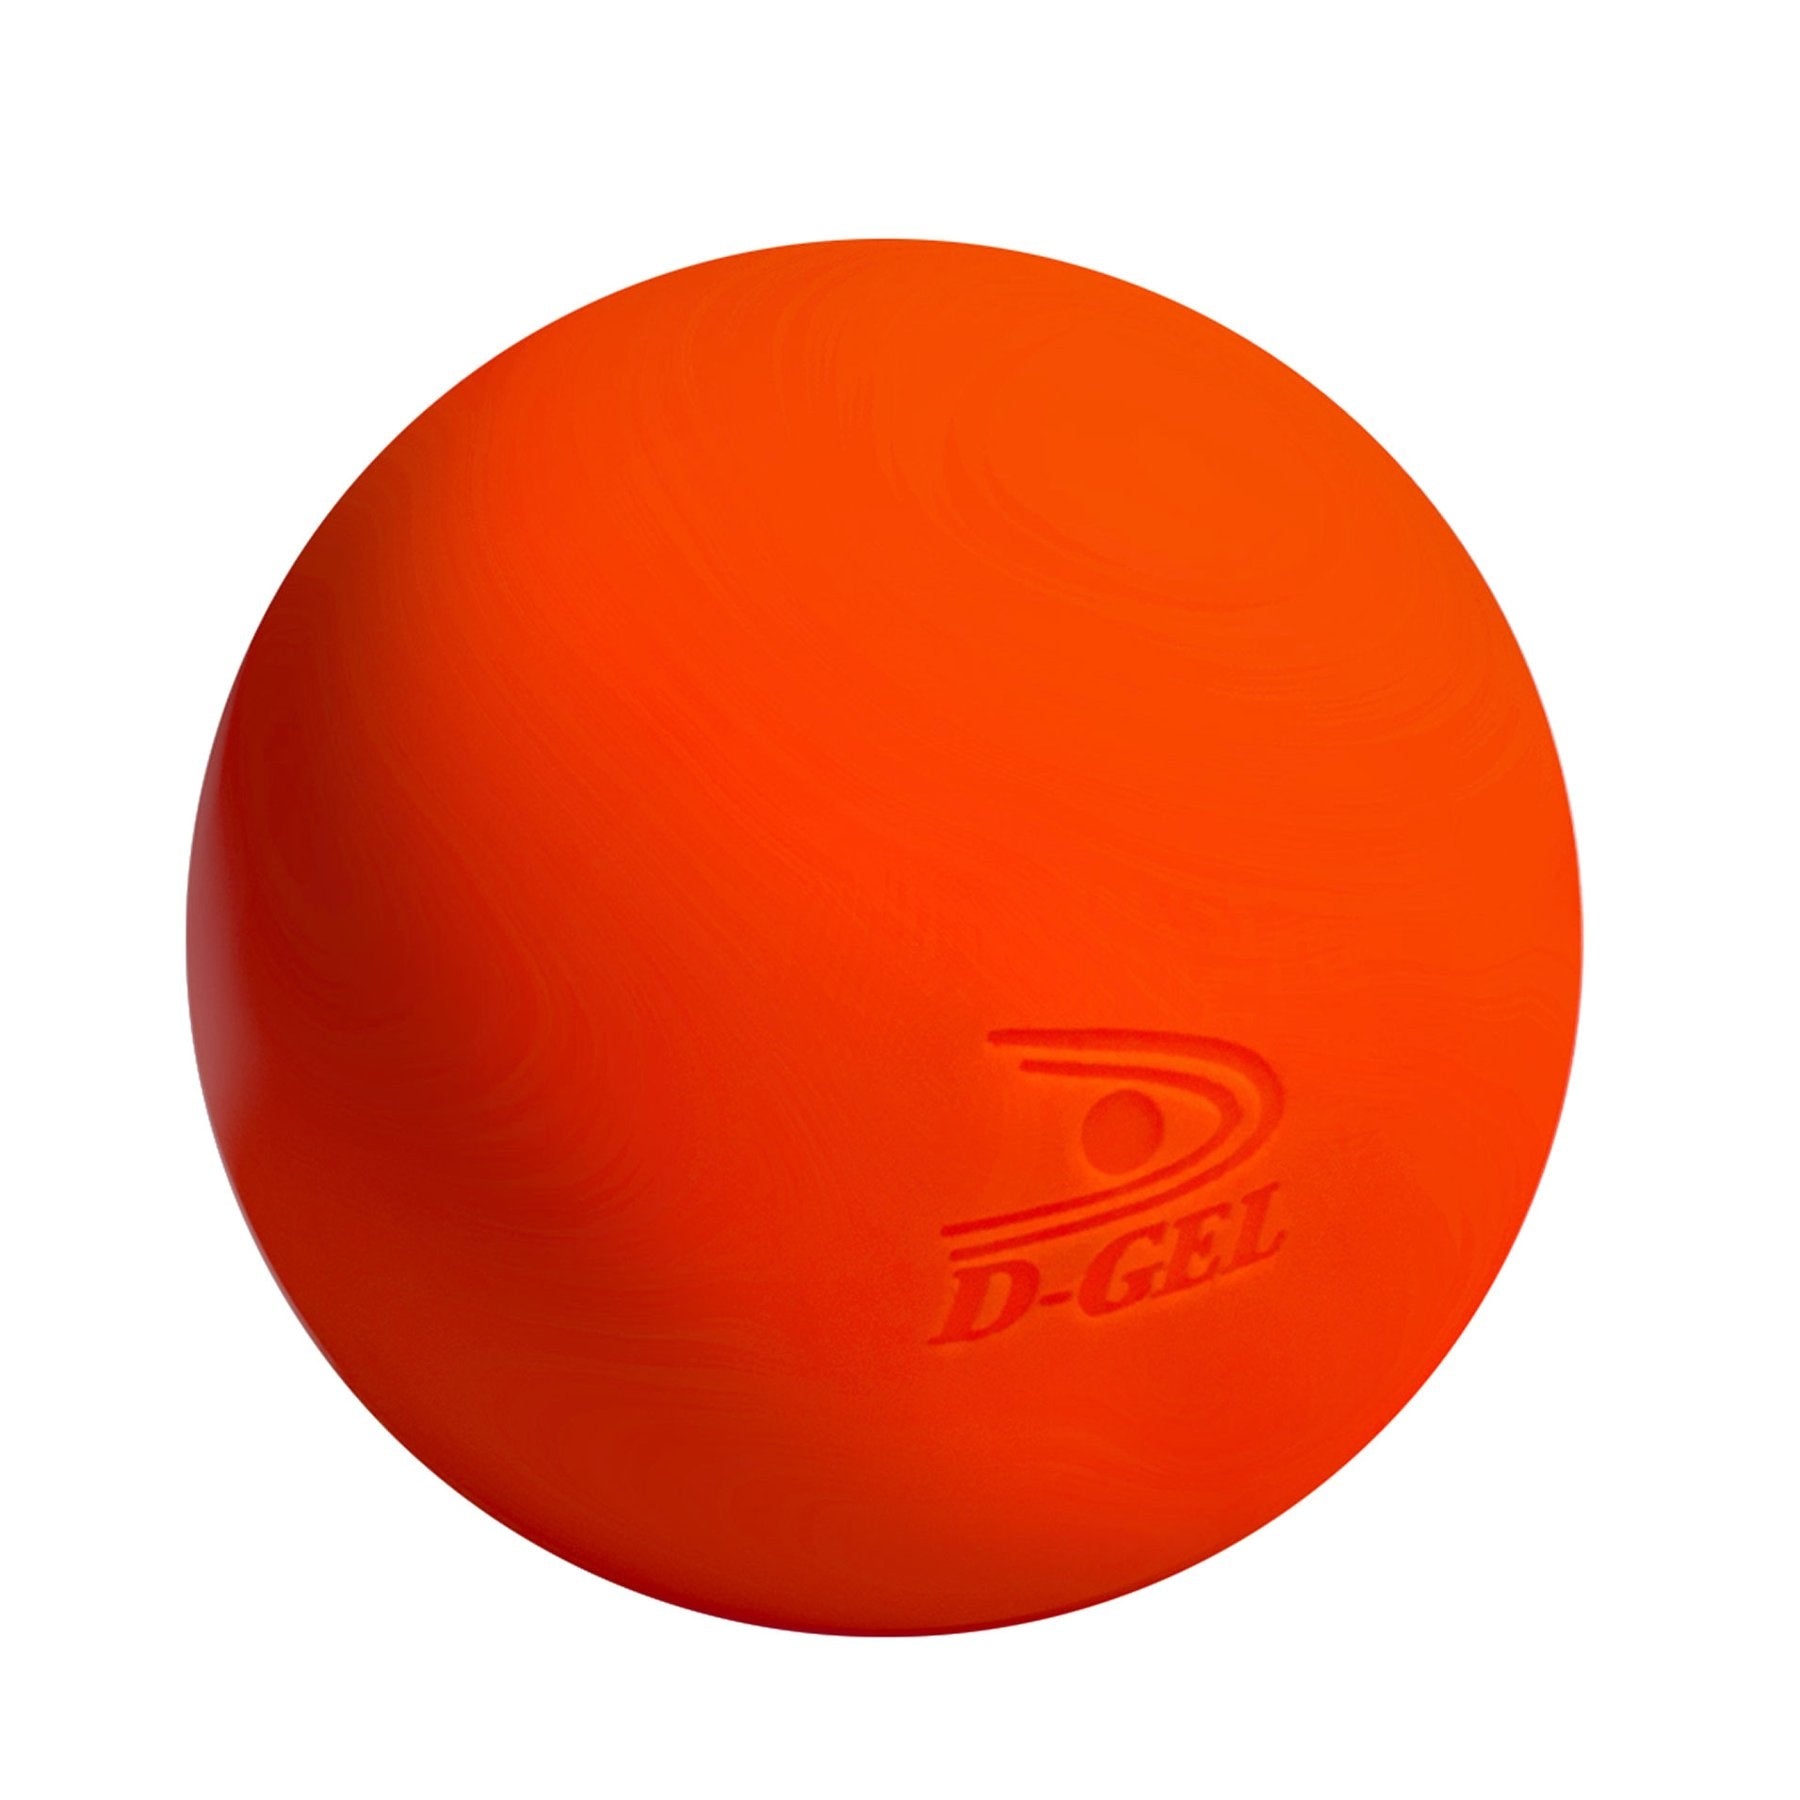 D-Gel Dek Ball Hockey Ball -Street Hockey -5 To 10 Degrees Orange Soft-D-Gel-Sports Replay - Sports Excellence